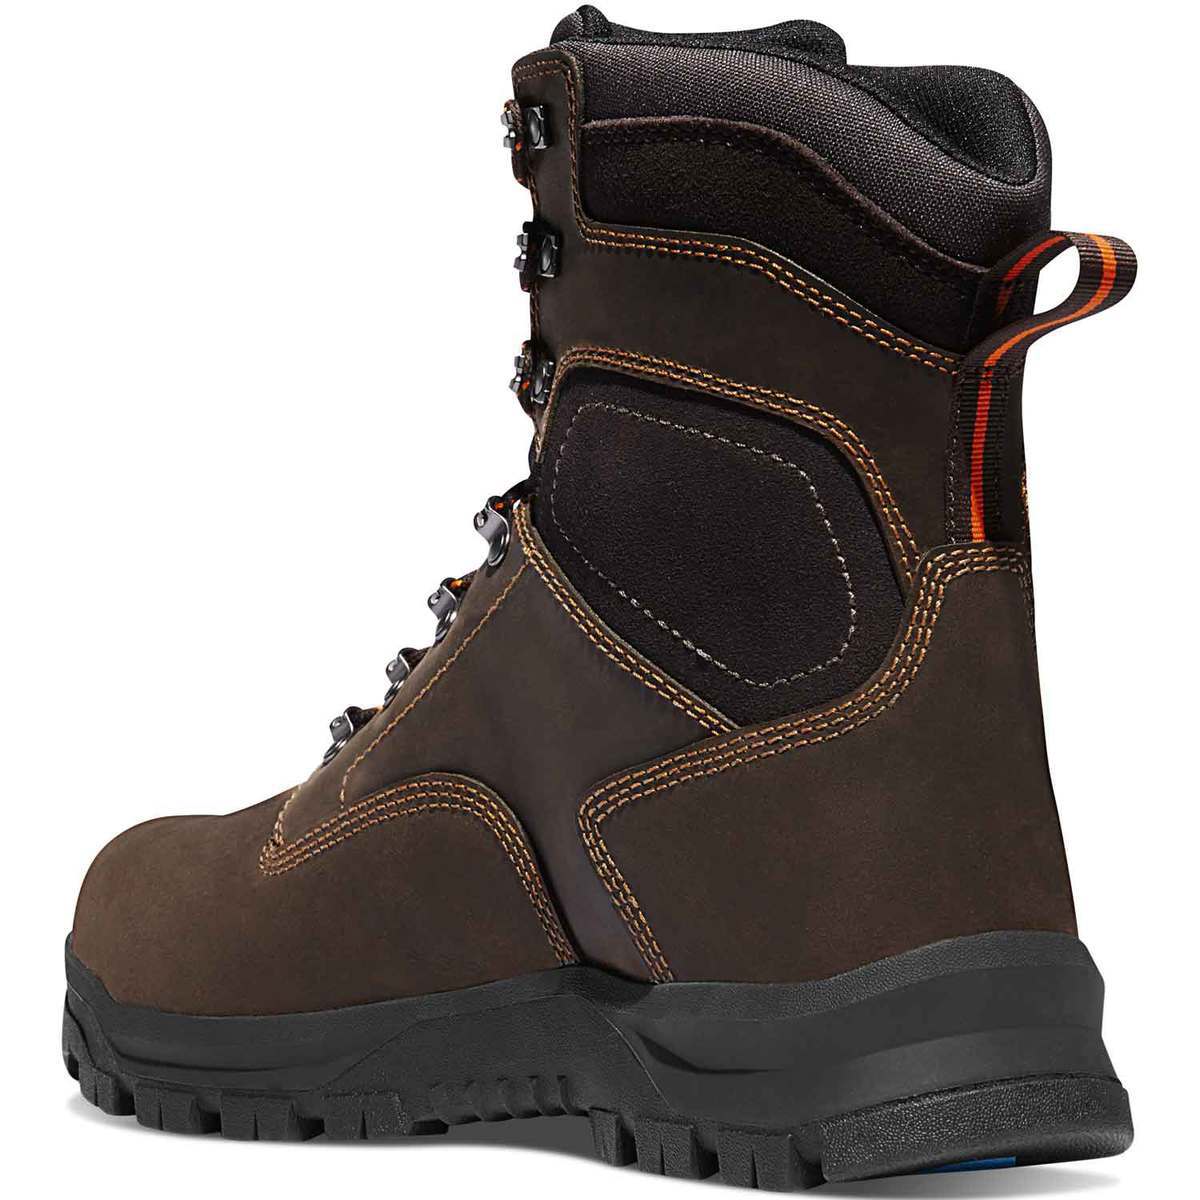 Danner Men's Crafter Composite Toe Work Boots - Brown - Size 14 D ...